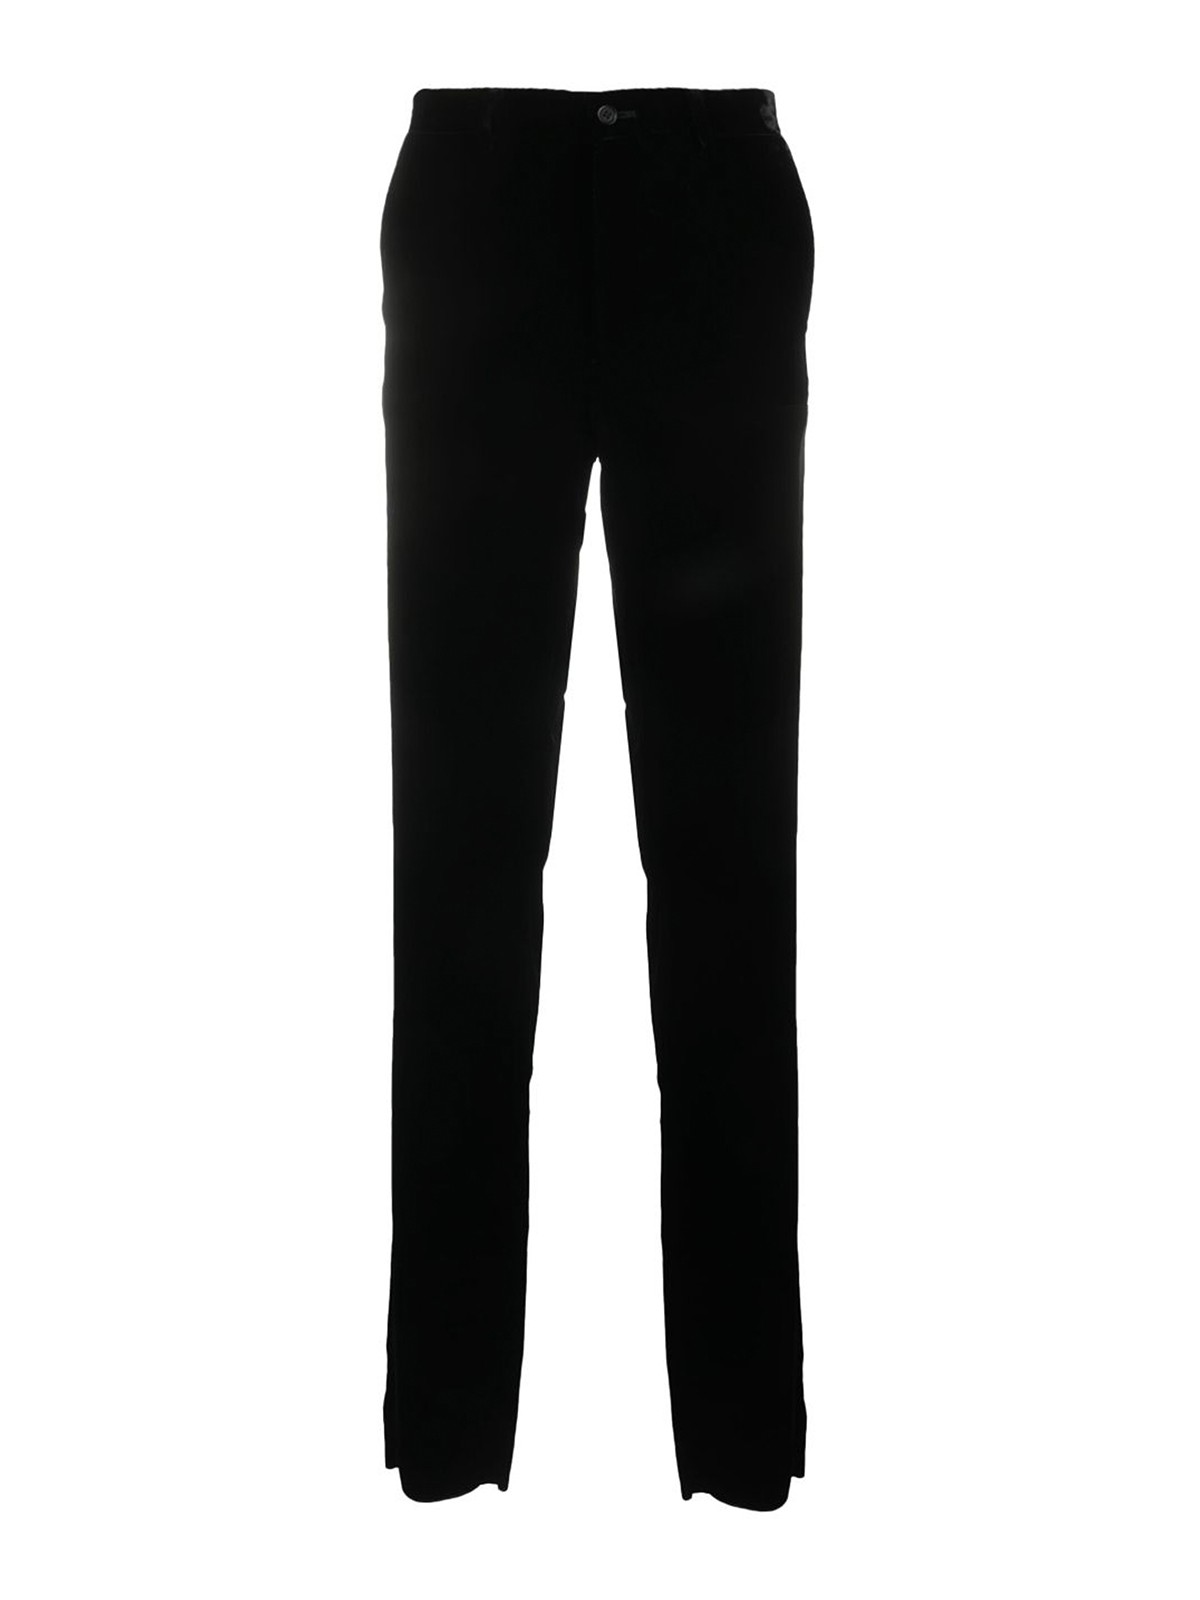 Armani Black Charcoal Flat Front Slide Pockets Trousers Pants sz 40 US  Medium | eBay